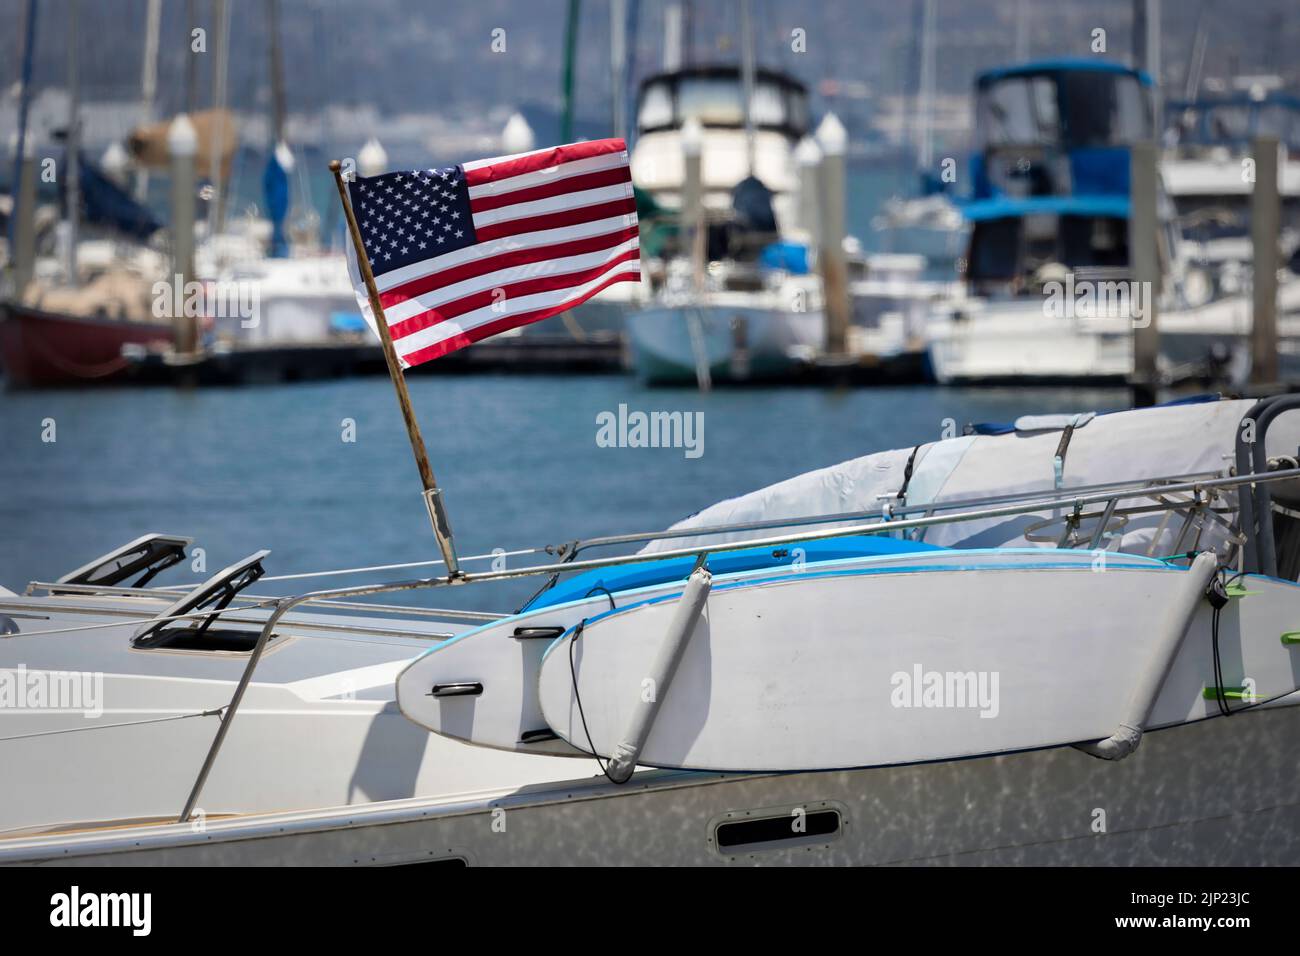 An American flag blows in the wind on a sailboat at Glorietta Bay in Coronado, California. Stock Photo